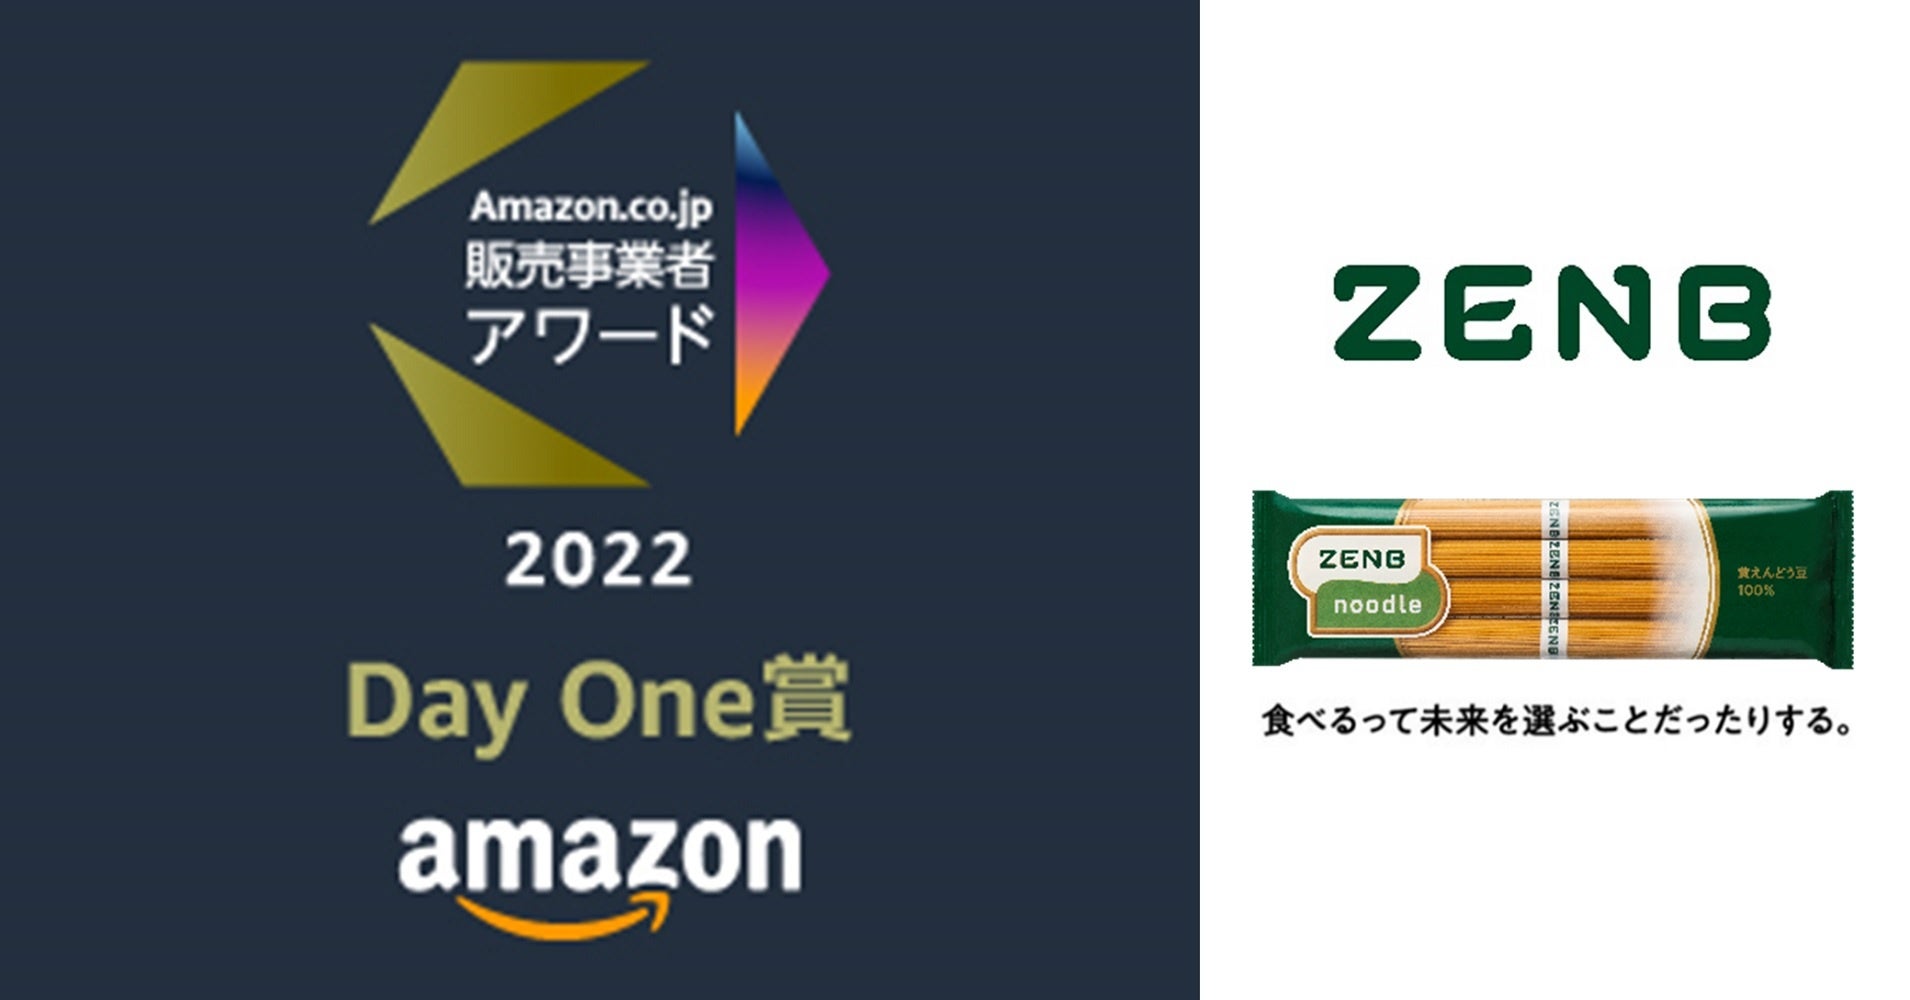 ZENBがAmazon.co.jp 販売事業者アワード2022にて「Day One賞」受賞のサブ画像1